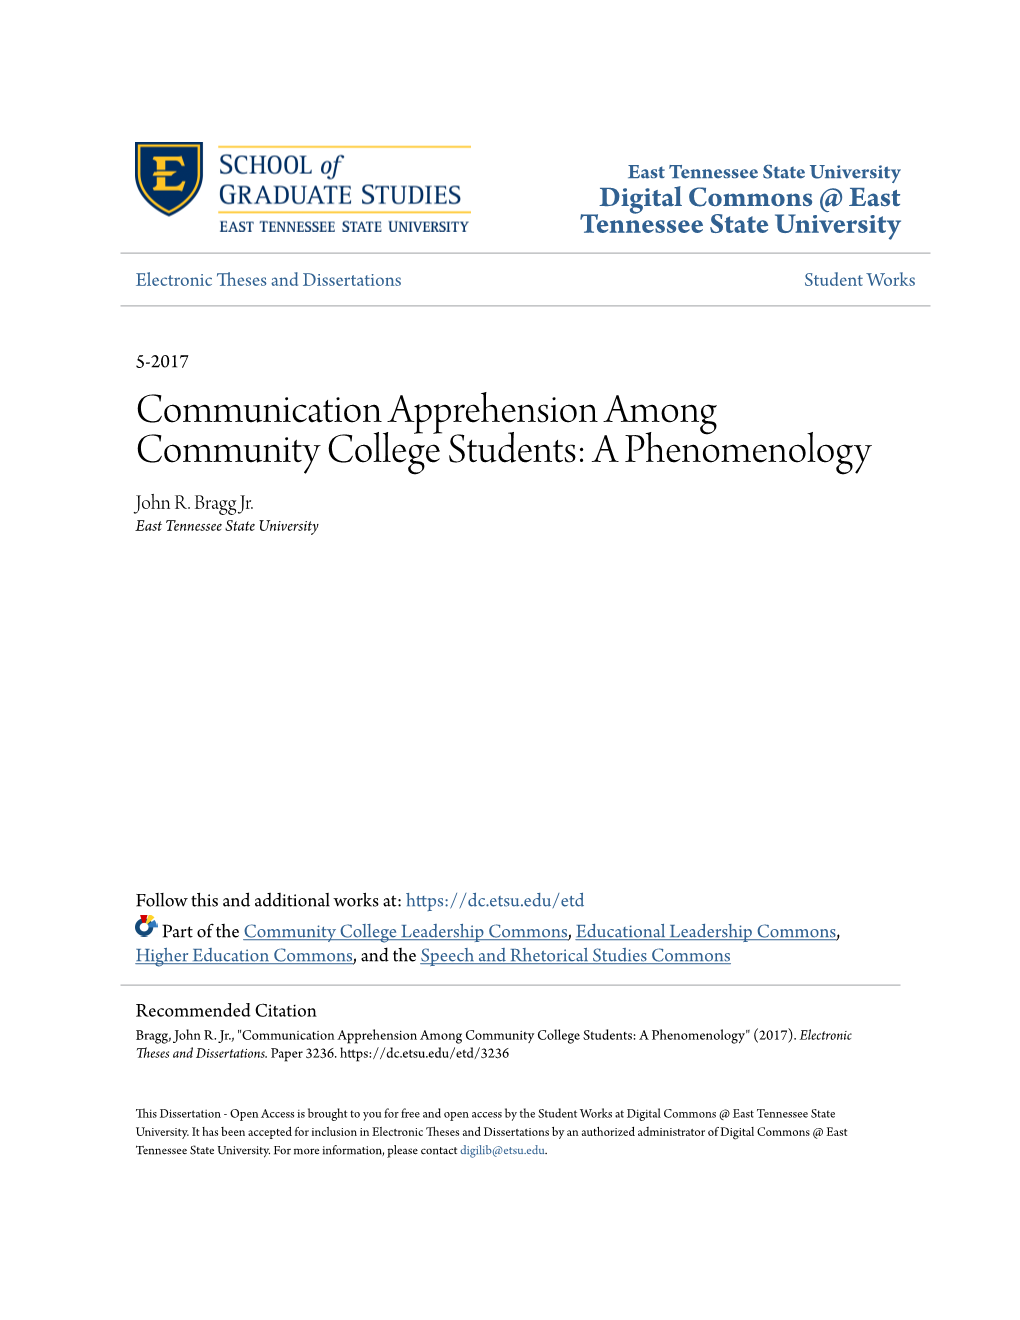 Communication Apprehension Among Community College Students: a Phenomenology John R